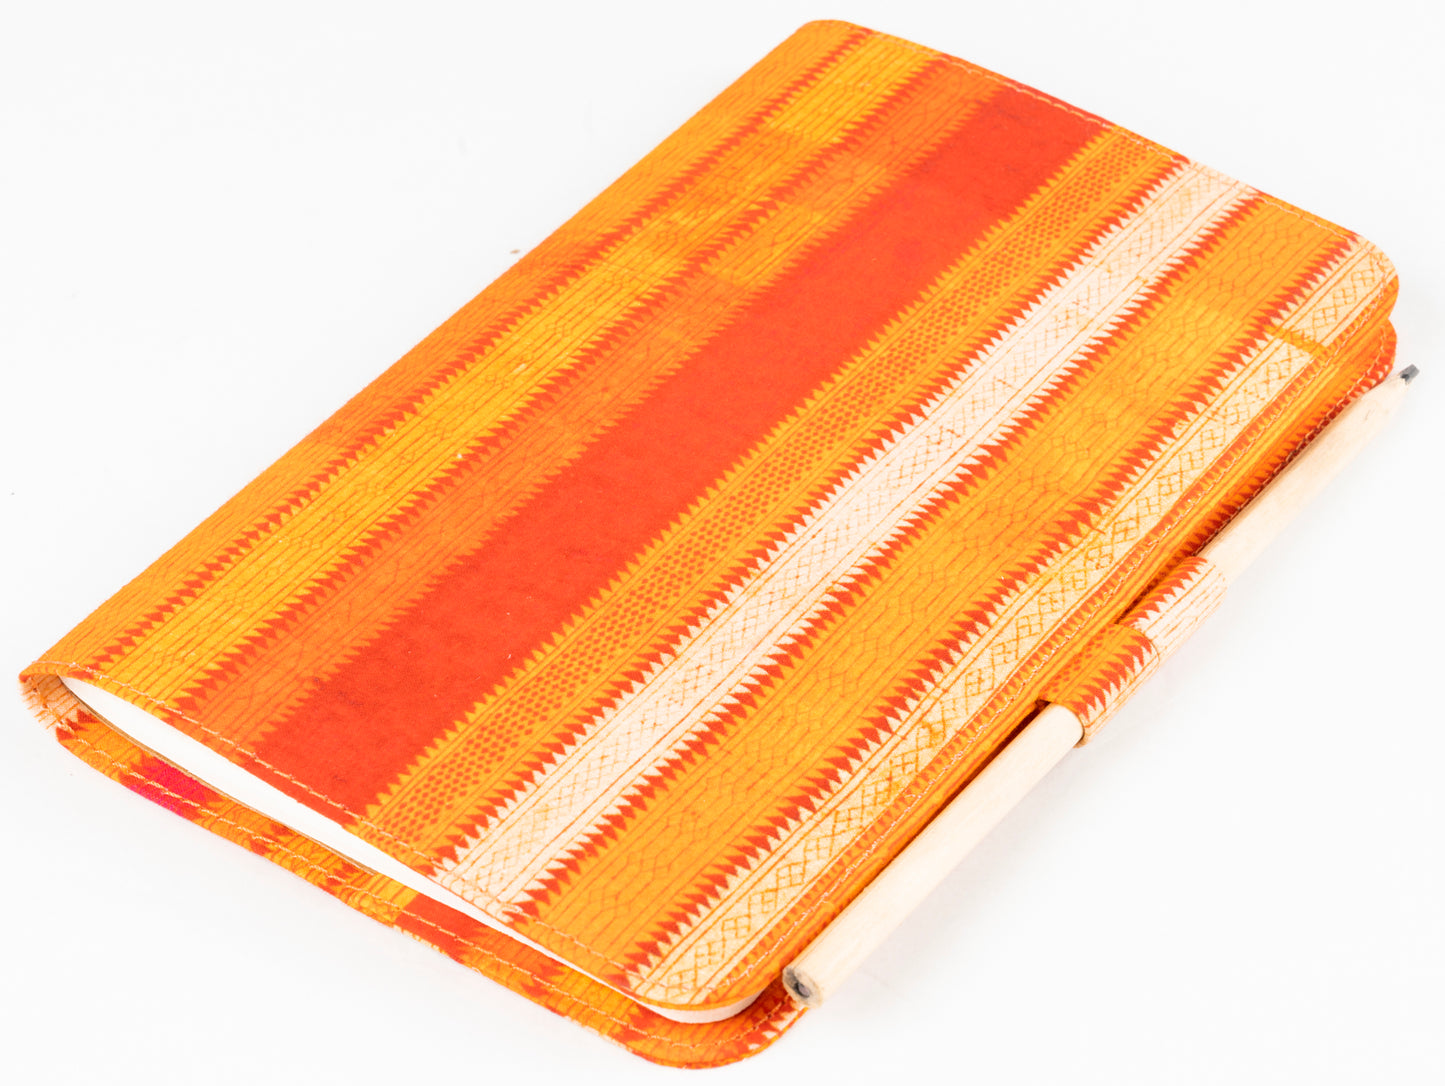 Fabric - Pencil Journal